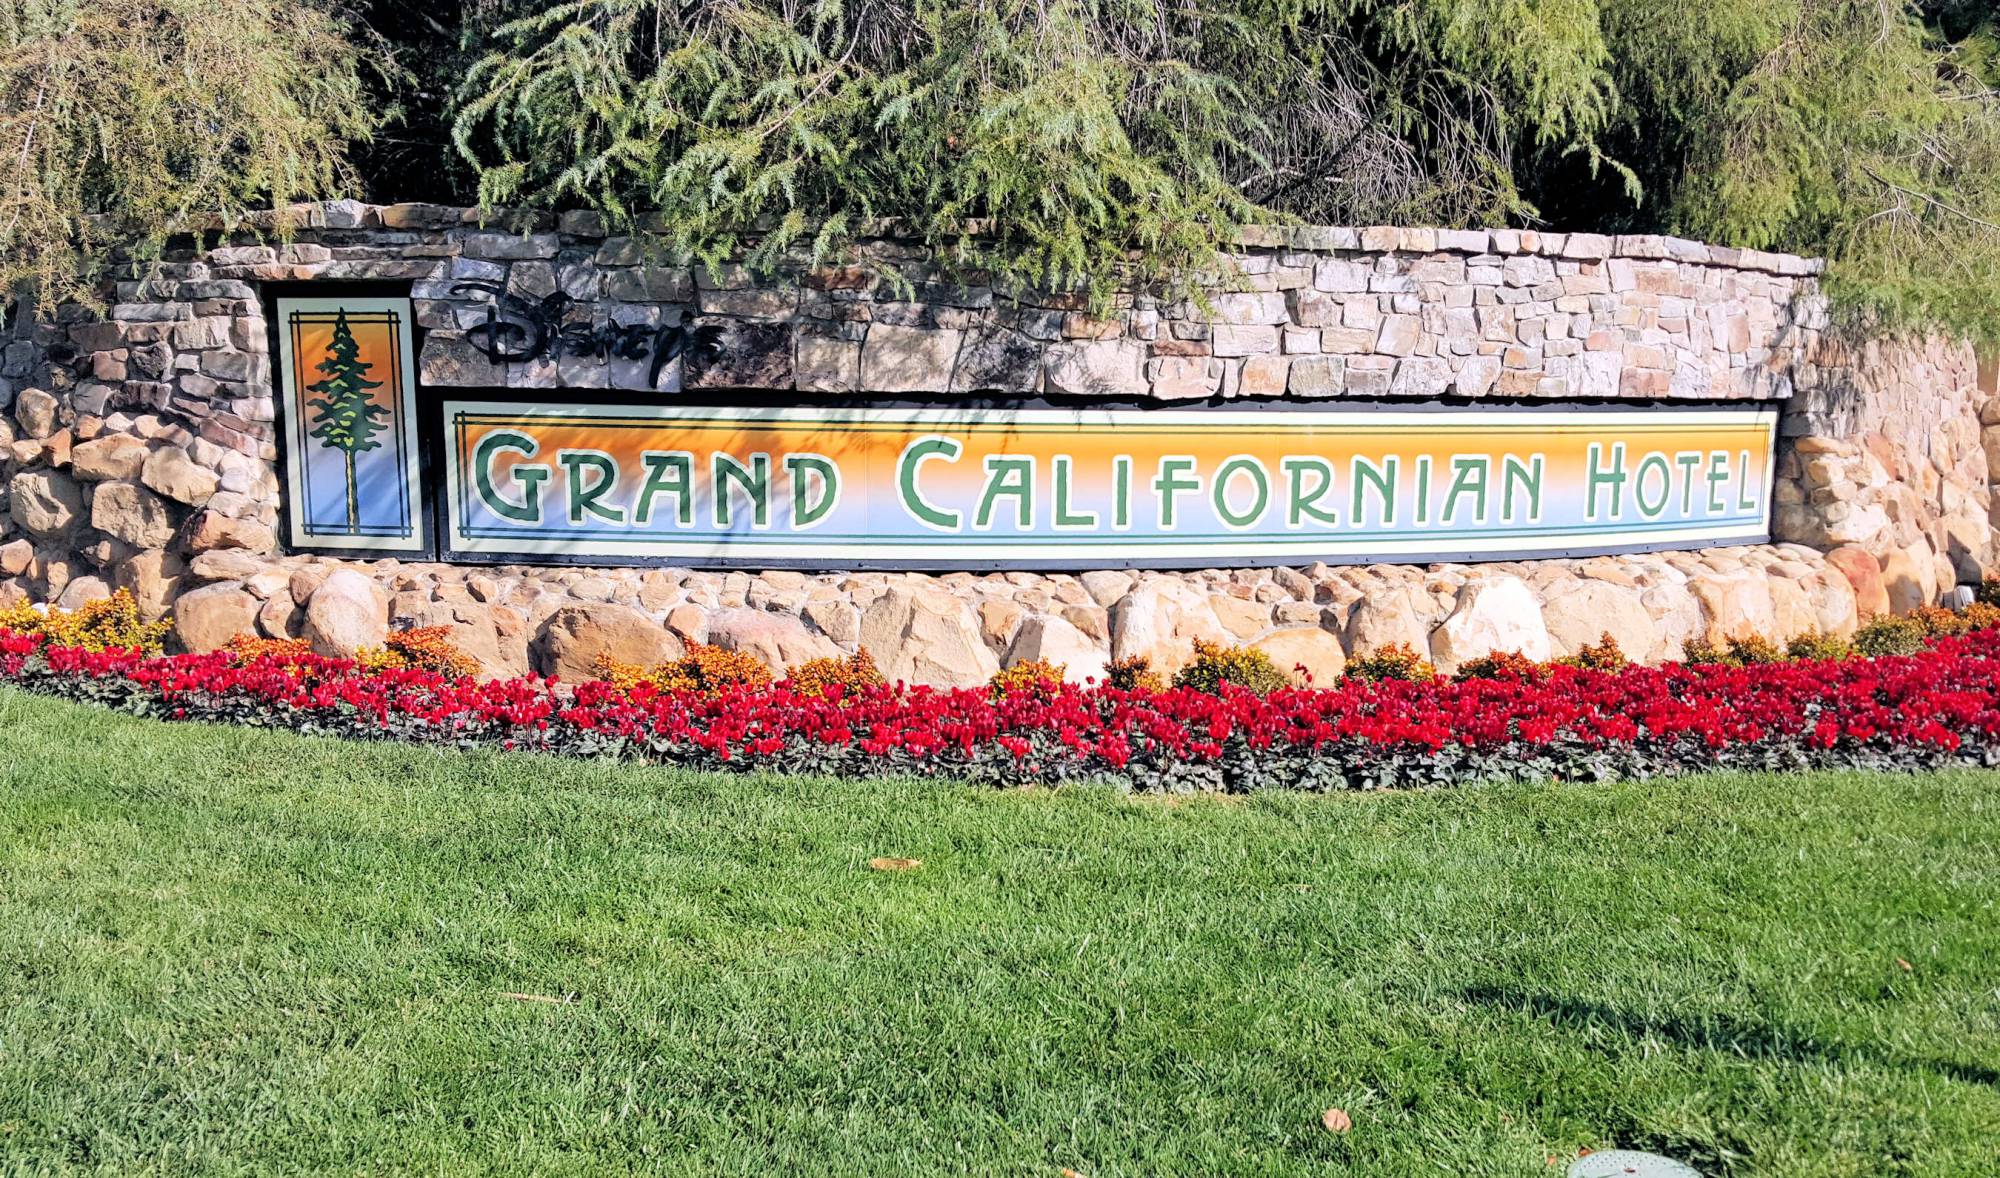 Disneyland--Grand Californian Hotel sign